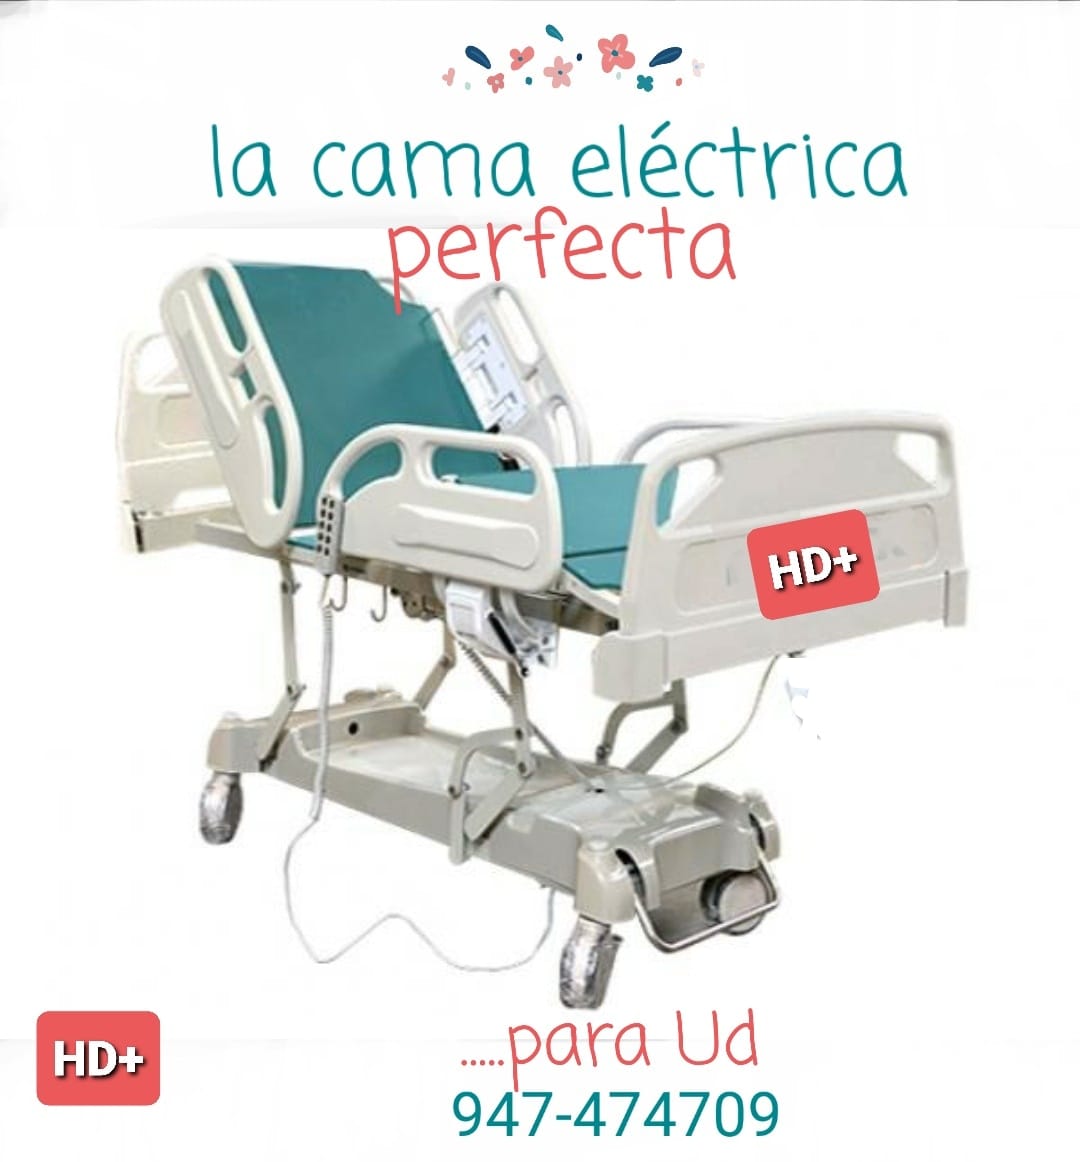 La Cama Clinica Electrica Perfecta para UD